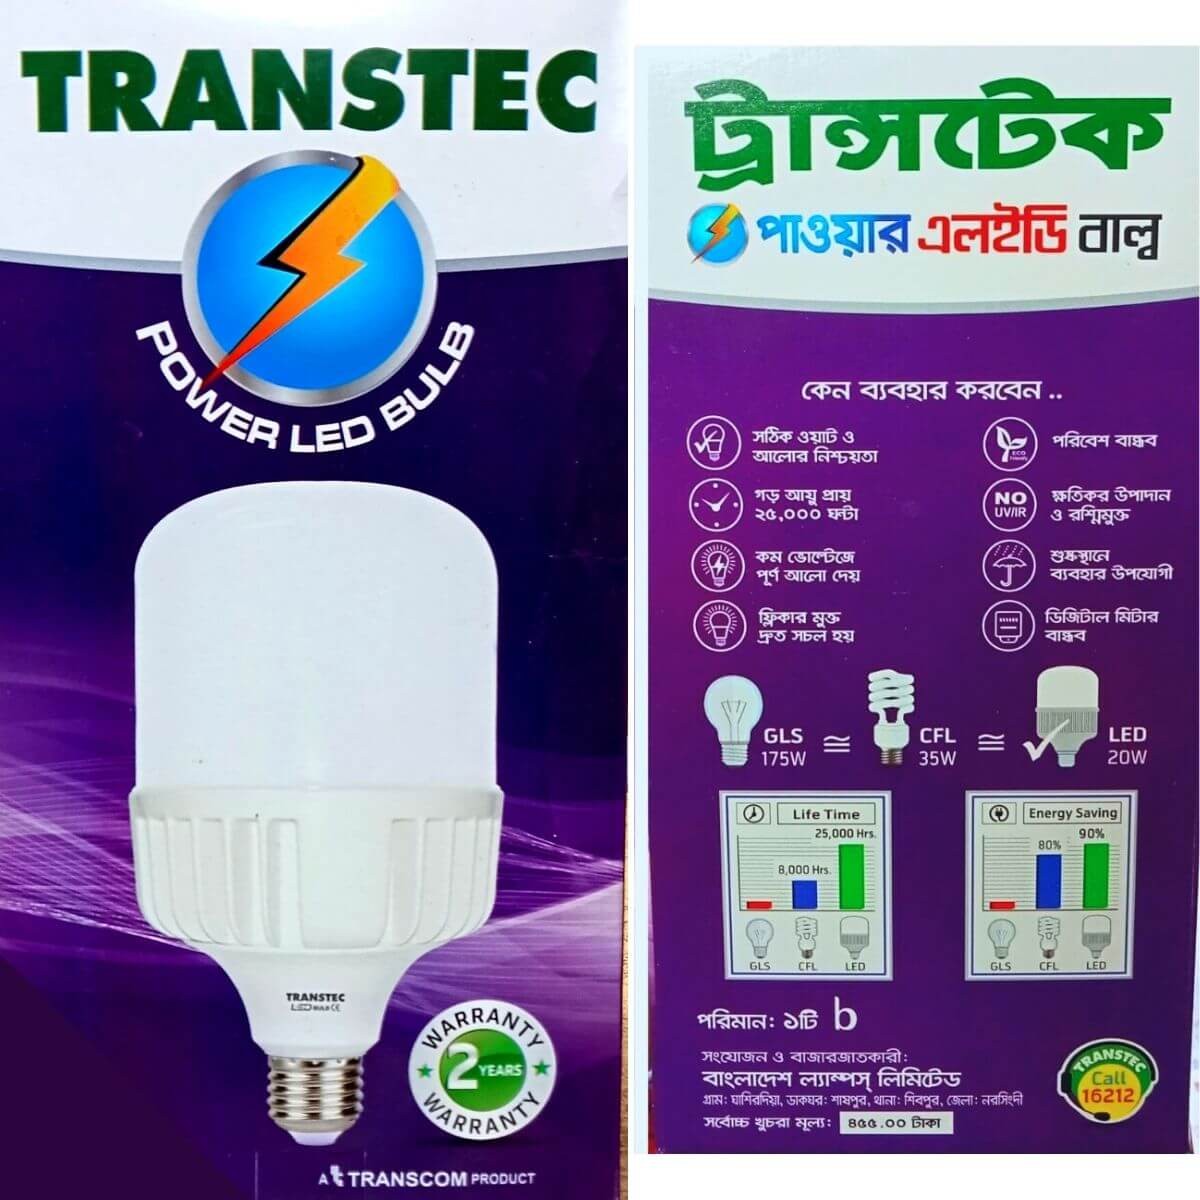 Transtec Bright 50Watt LED Bulb প্যাচ টাইপ... BD